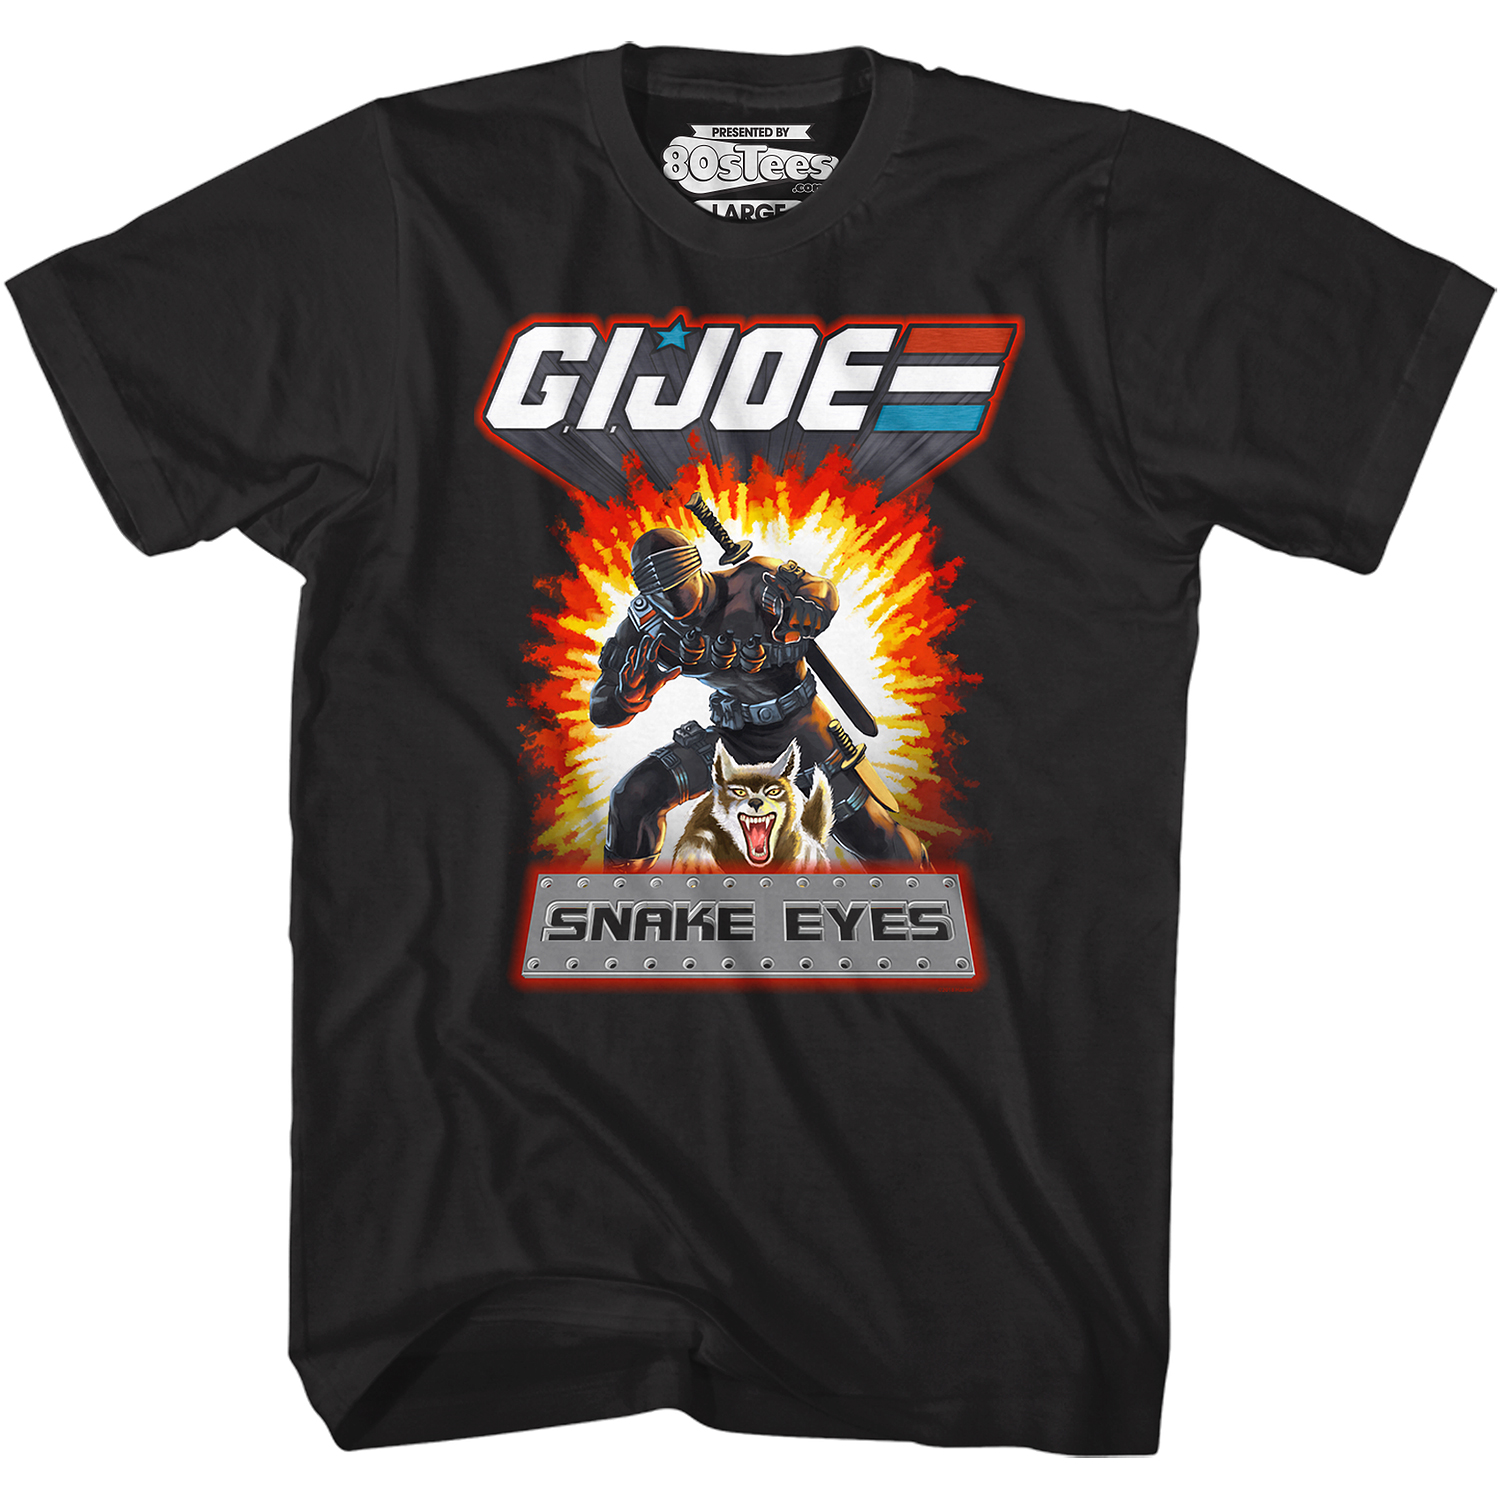 gi-joe-snake-eyes-tee-shirt